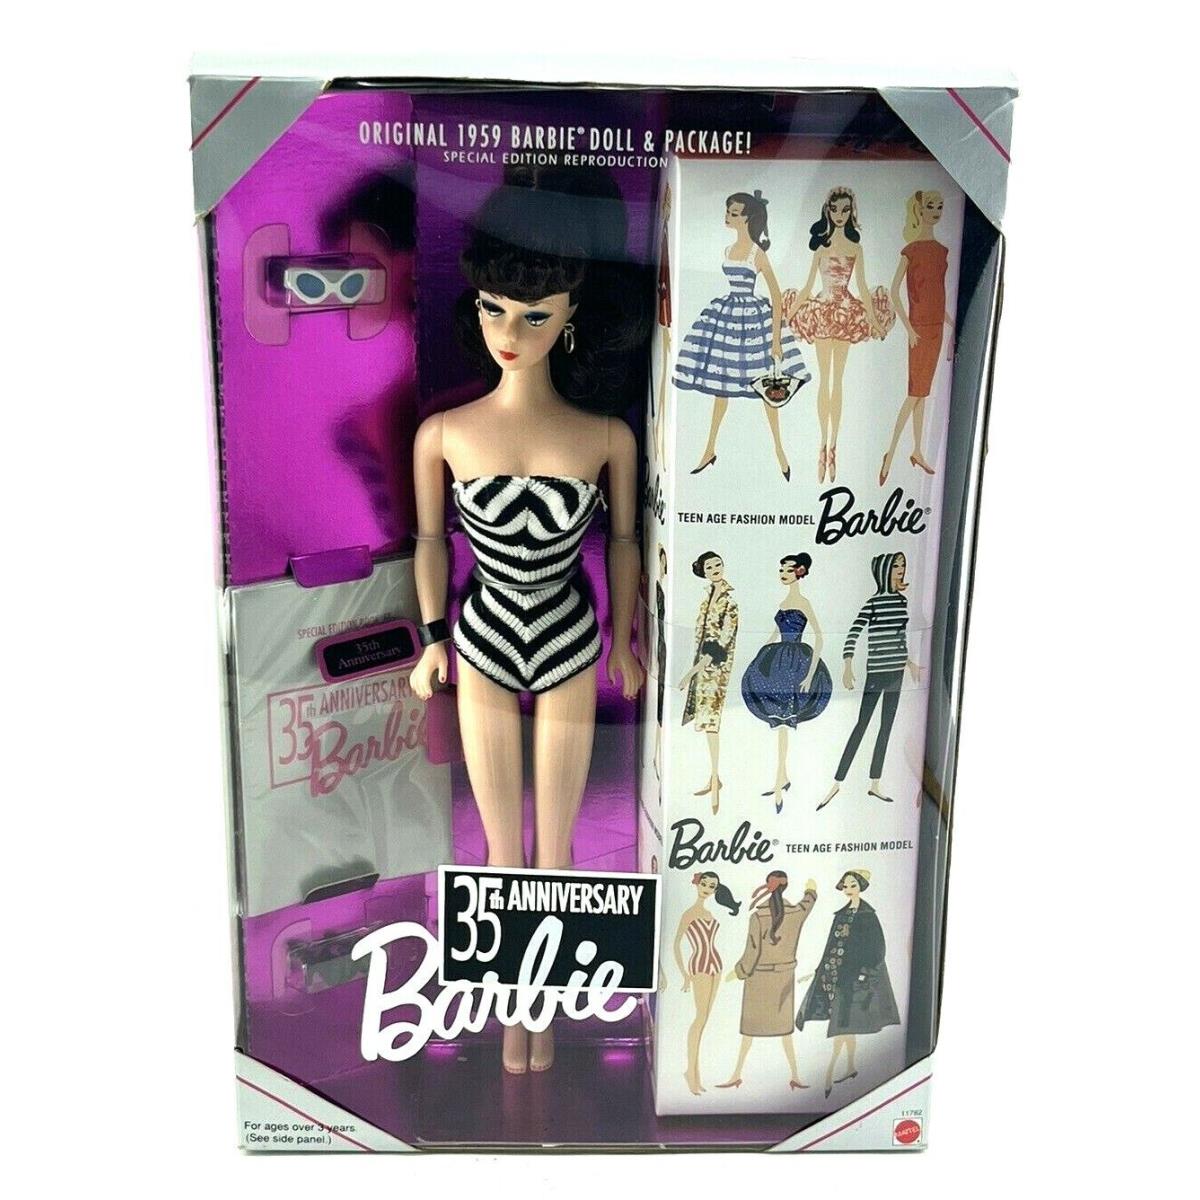 35th Anniversary Brunette 1994 Barbie Doll